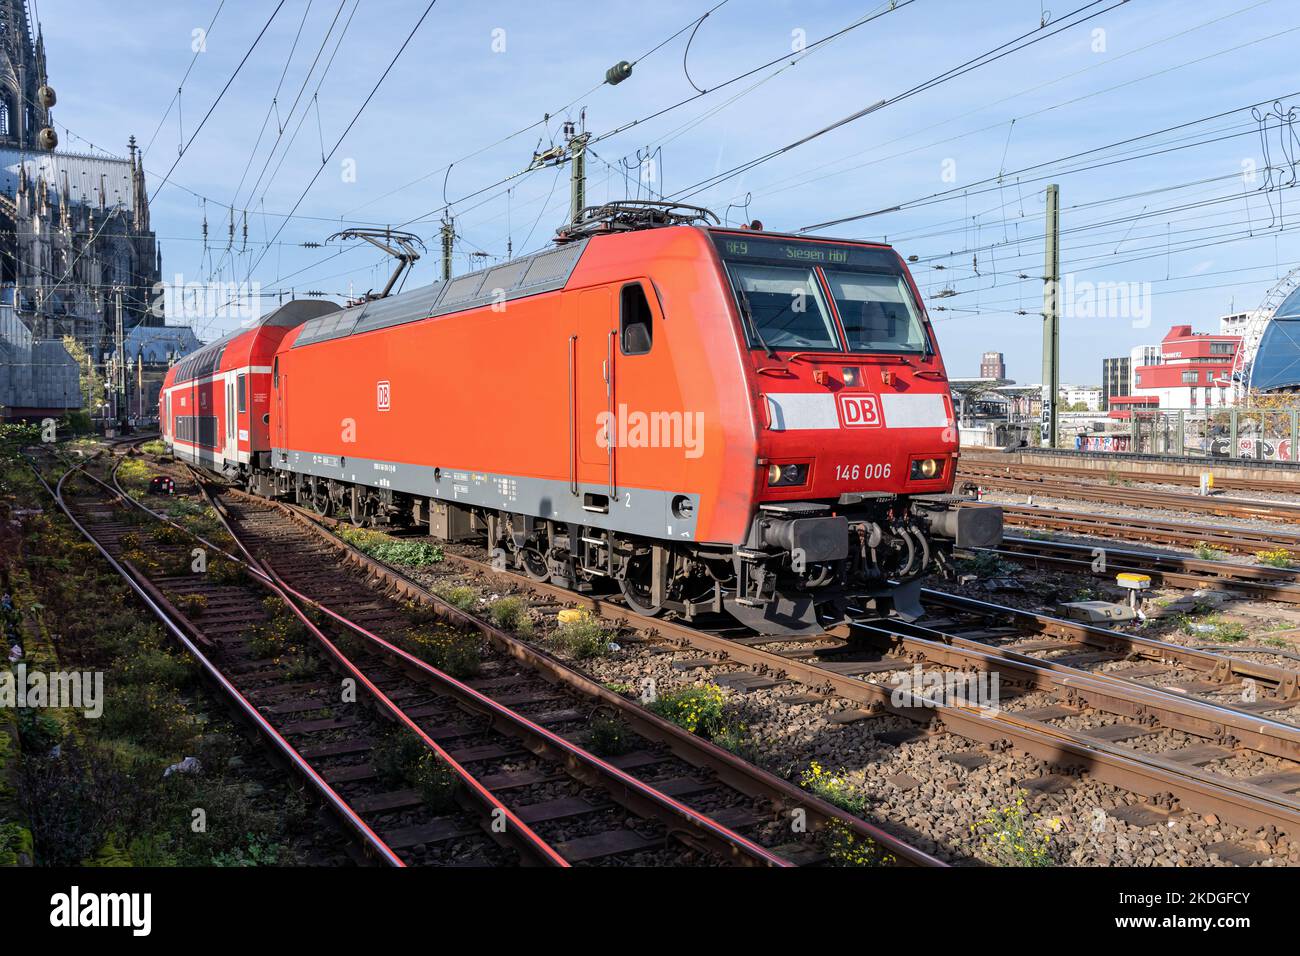 DB Regio train at Cologne main station Stock Photo